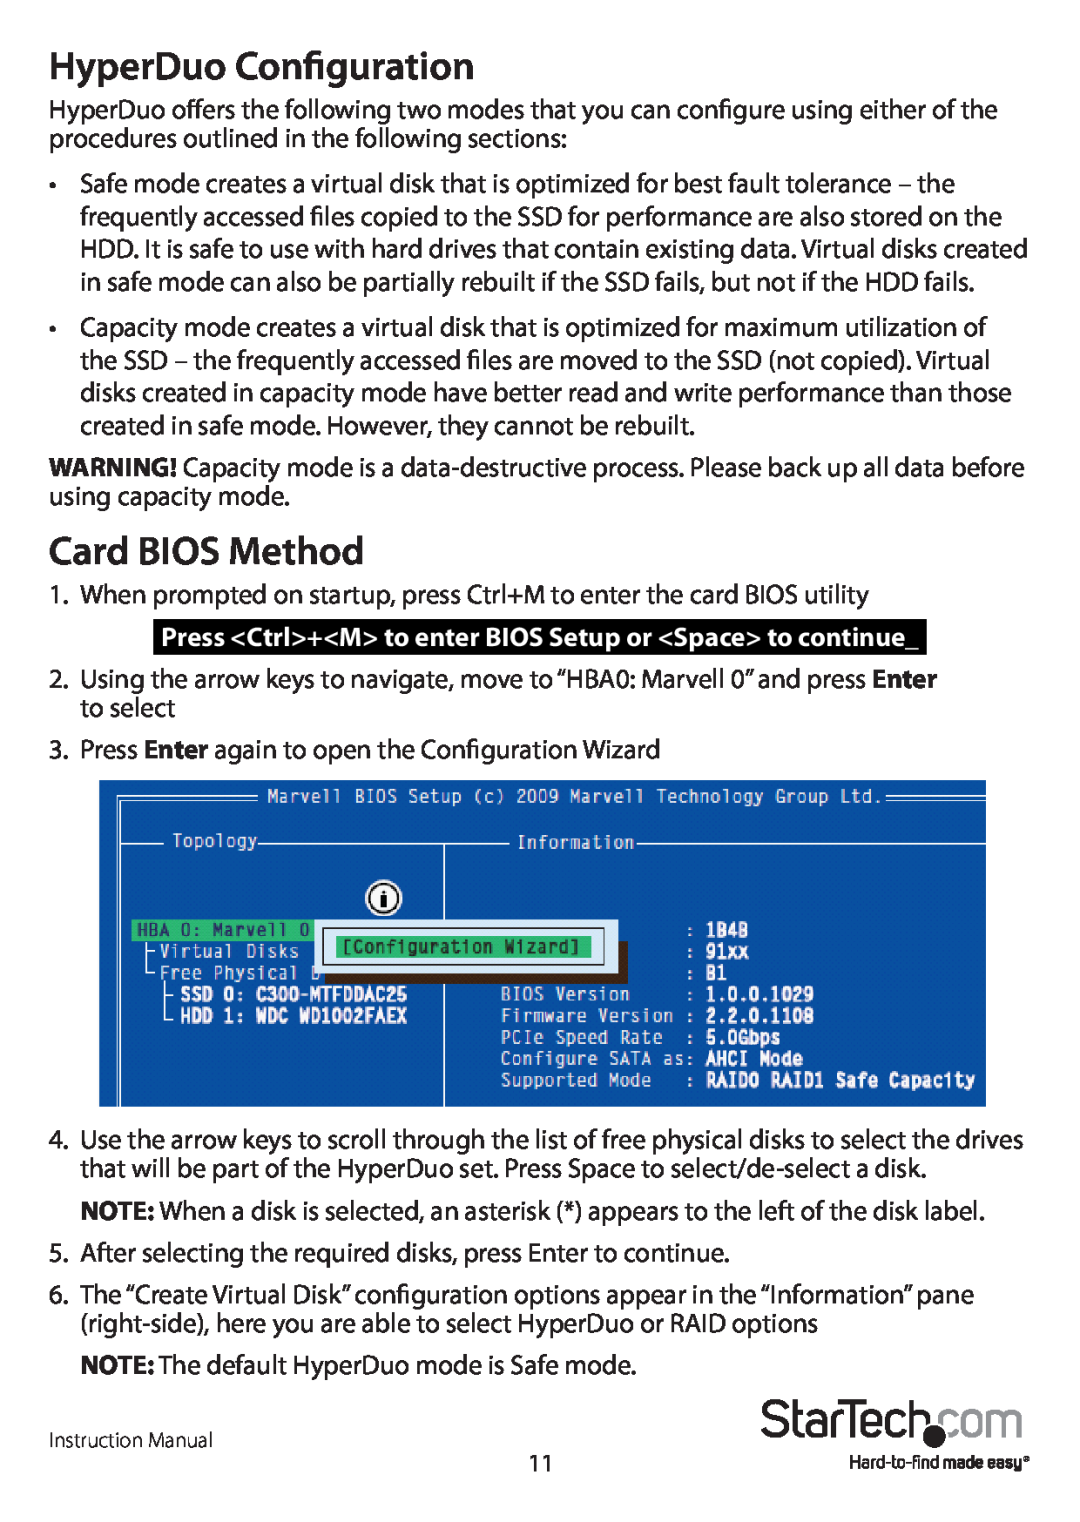 StarTech.com PEXSAT34RH HyperDuo Configuration, Card BIOS Method, Press Ctrl+M to enter BIOS Setup or Space to continue 